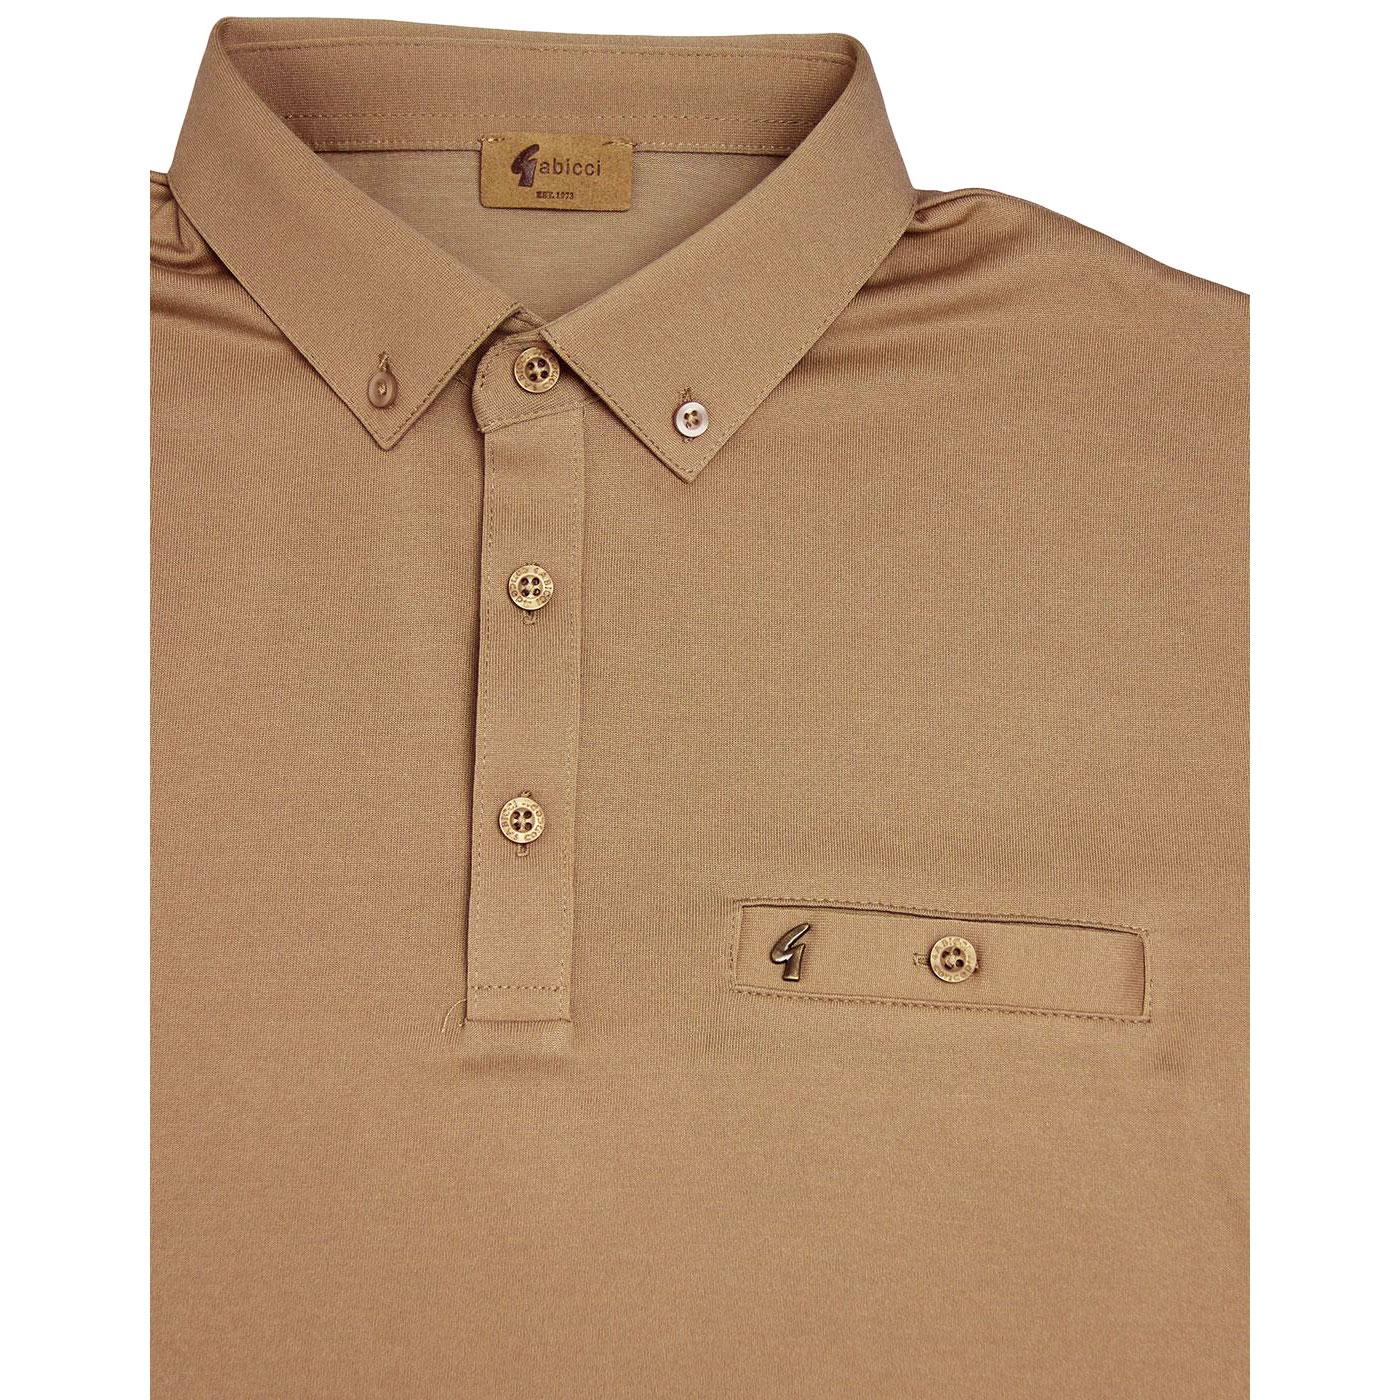 GABICCI VINTAGE 'Ladro' Men's Mod Polo Shirt Butterscotch